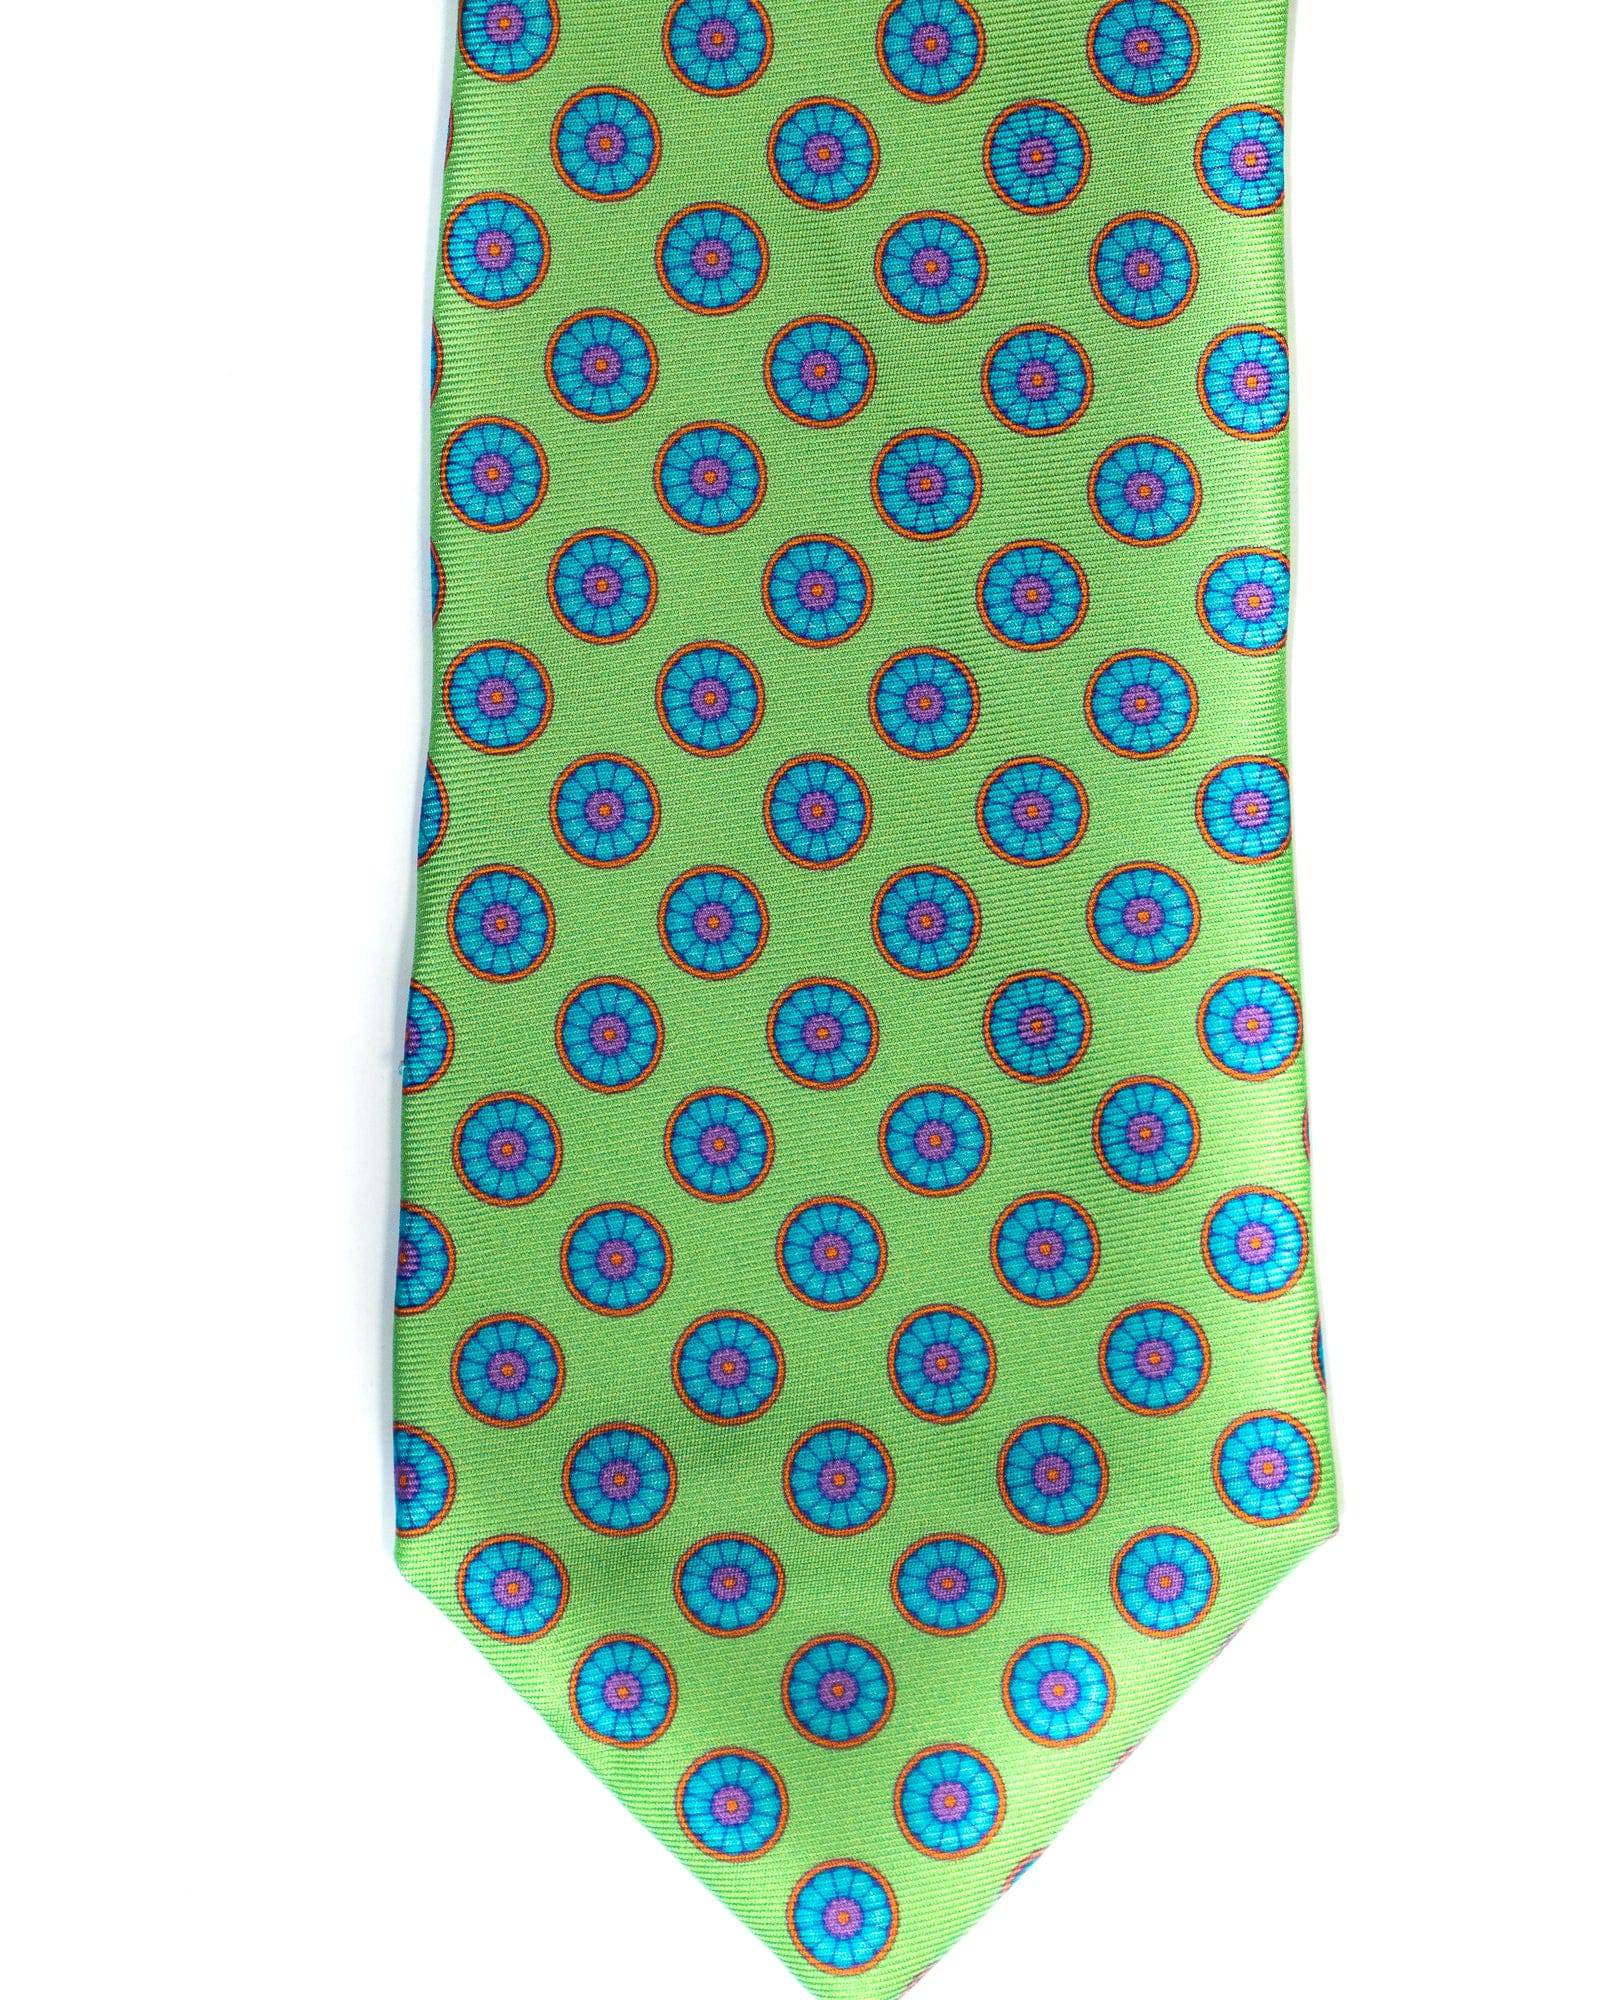 Silk Tie In Lime Green Foulard Print - Rainwater's Men's Clothing and Tuxedo Rental